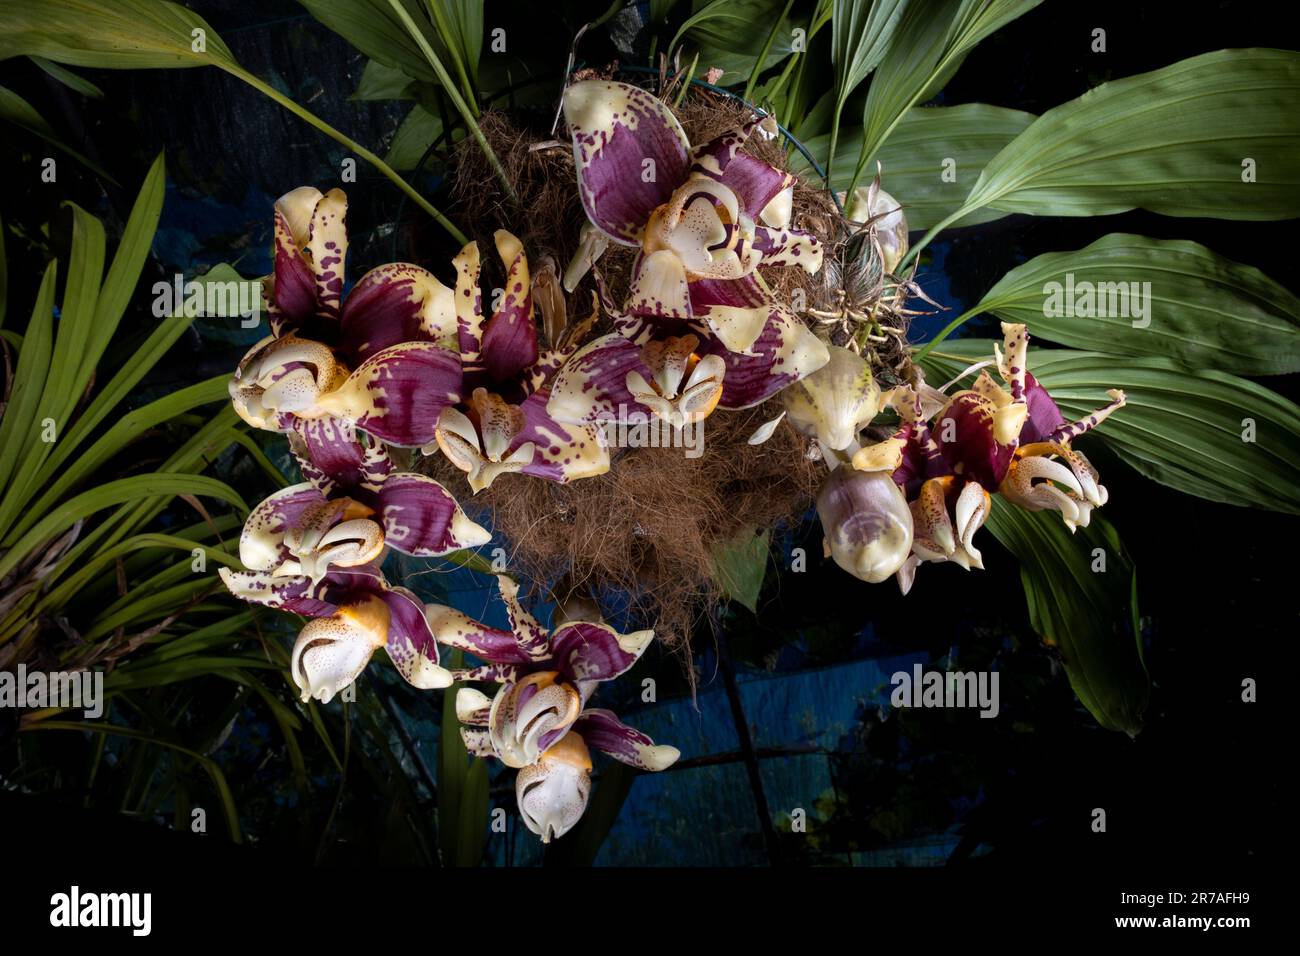 Stanhopea nigroviolacea (upside down) orchid flowers Stock Photo